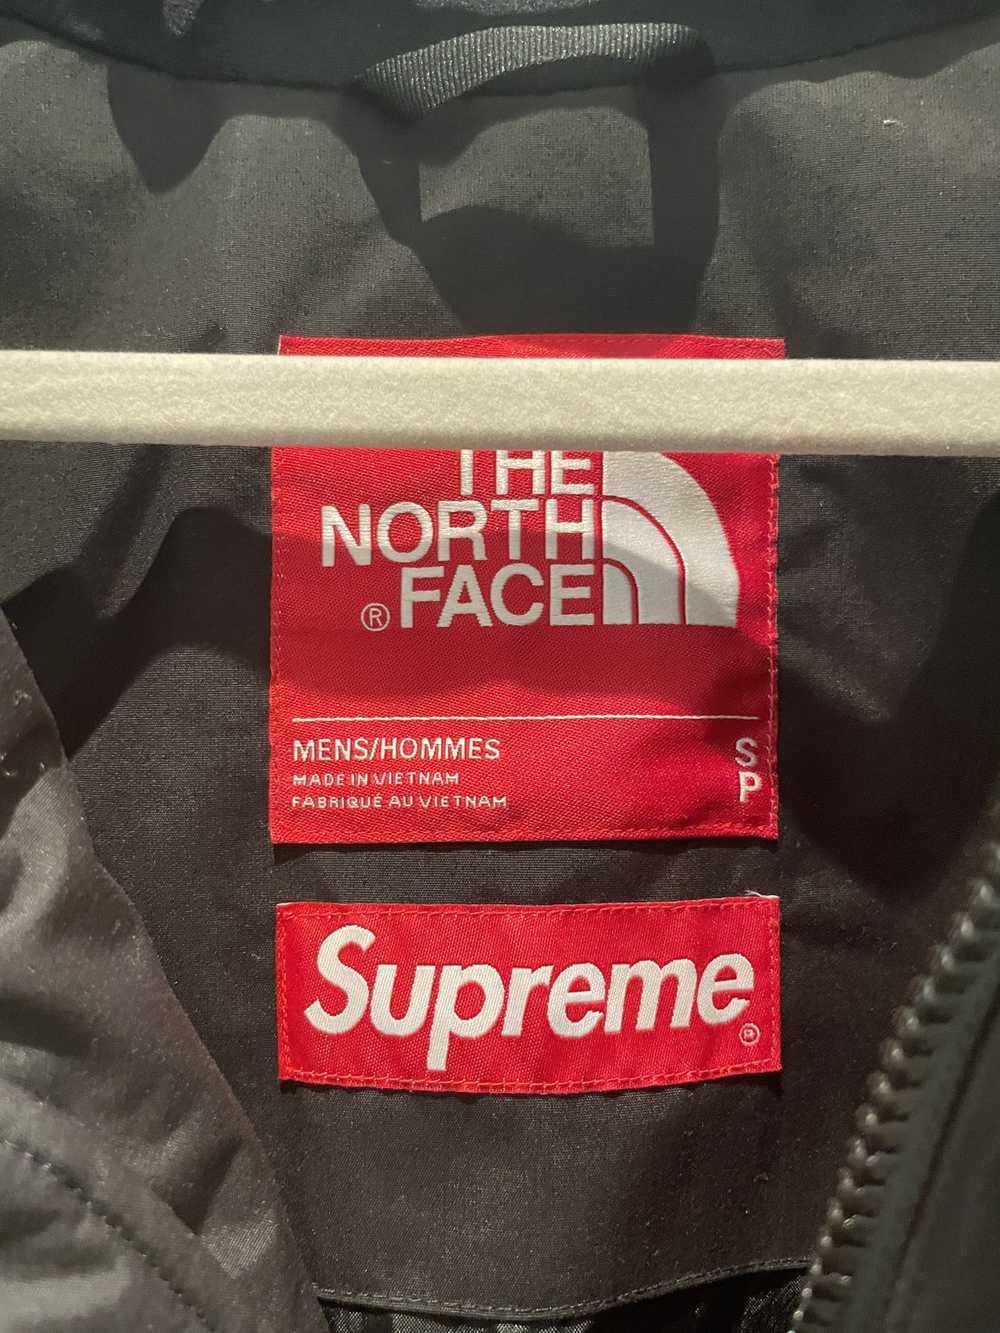 TNF The North Face Black Label Shelter Camo Hoodie Sweatshirt Supreme Size  M L